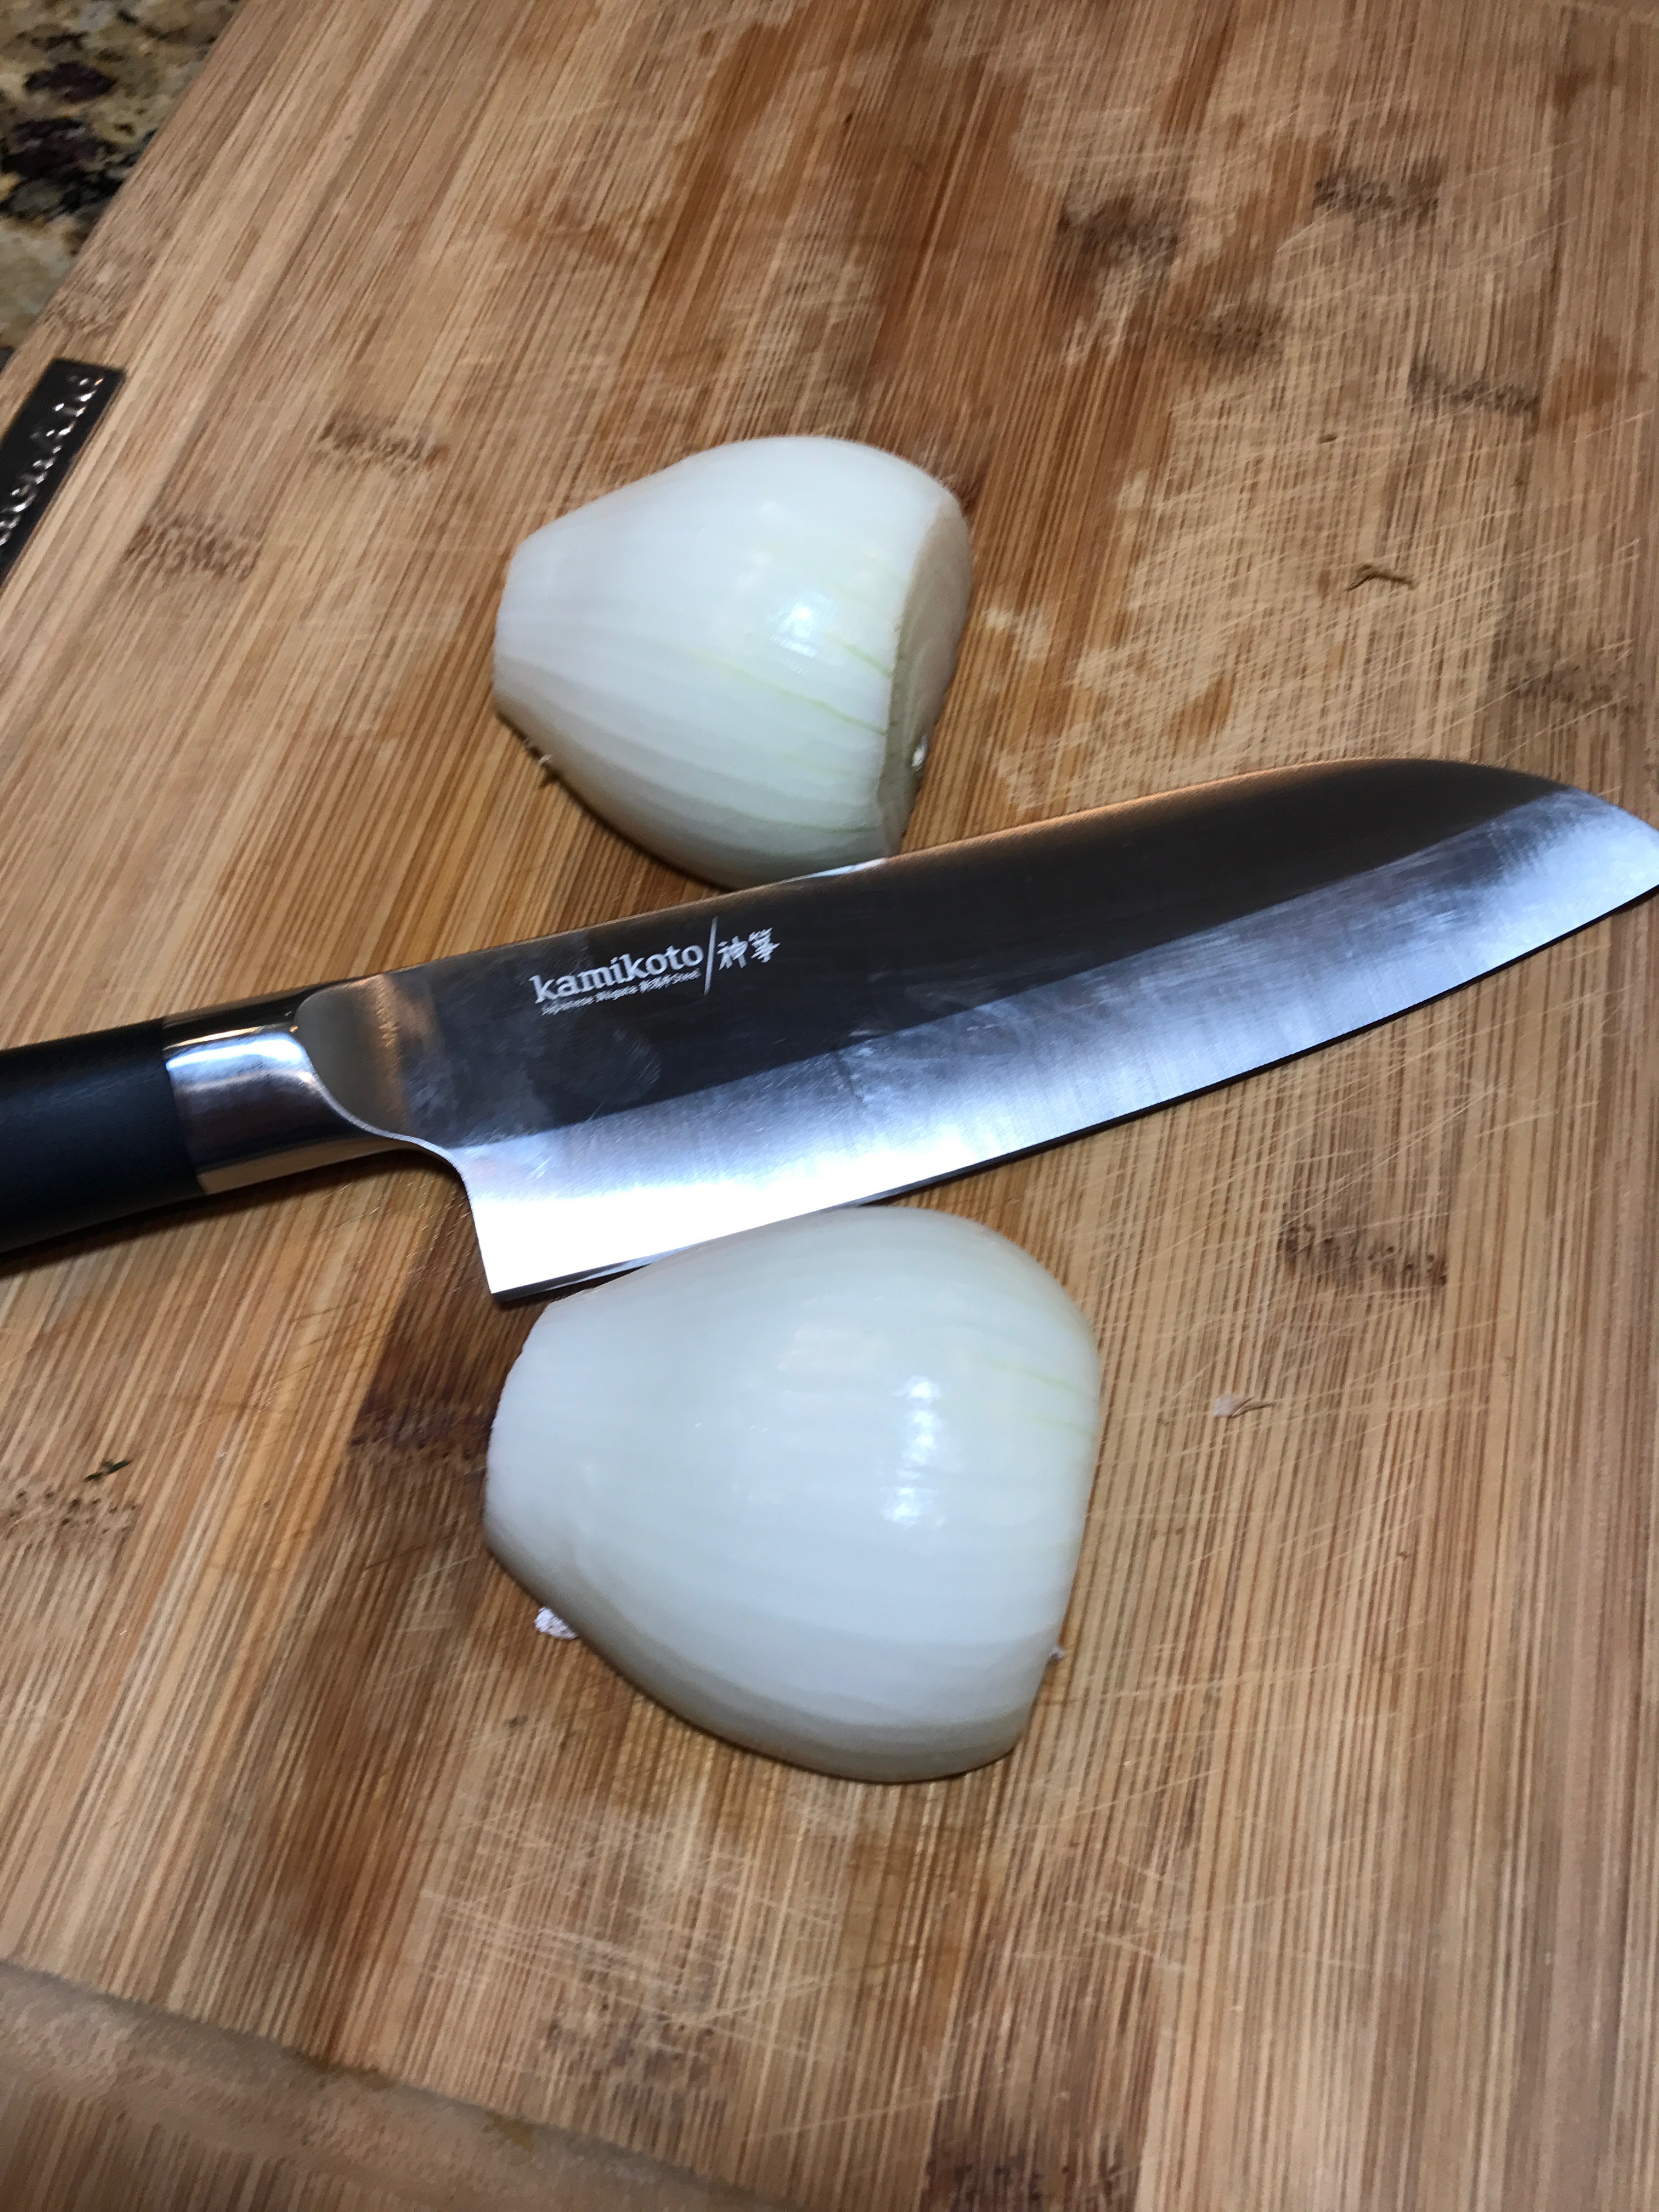 Kamikoto Knives, Steak Knives